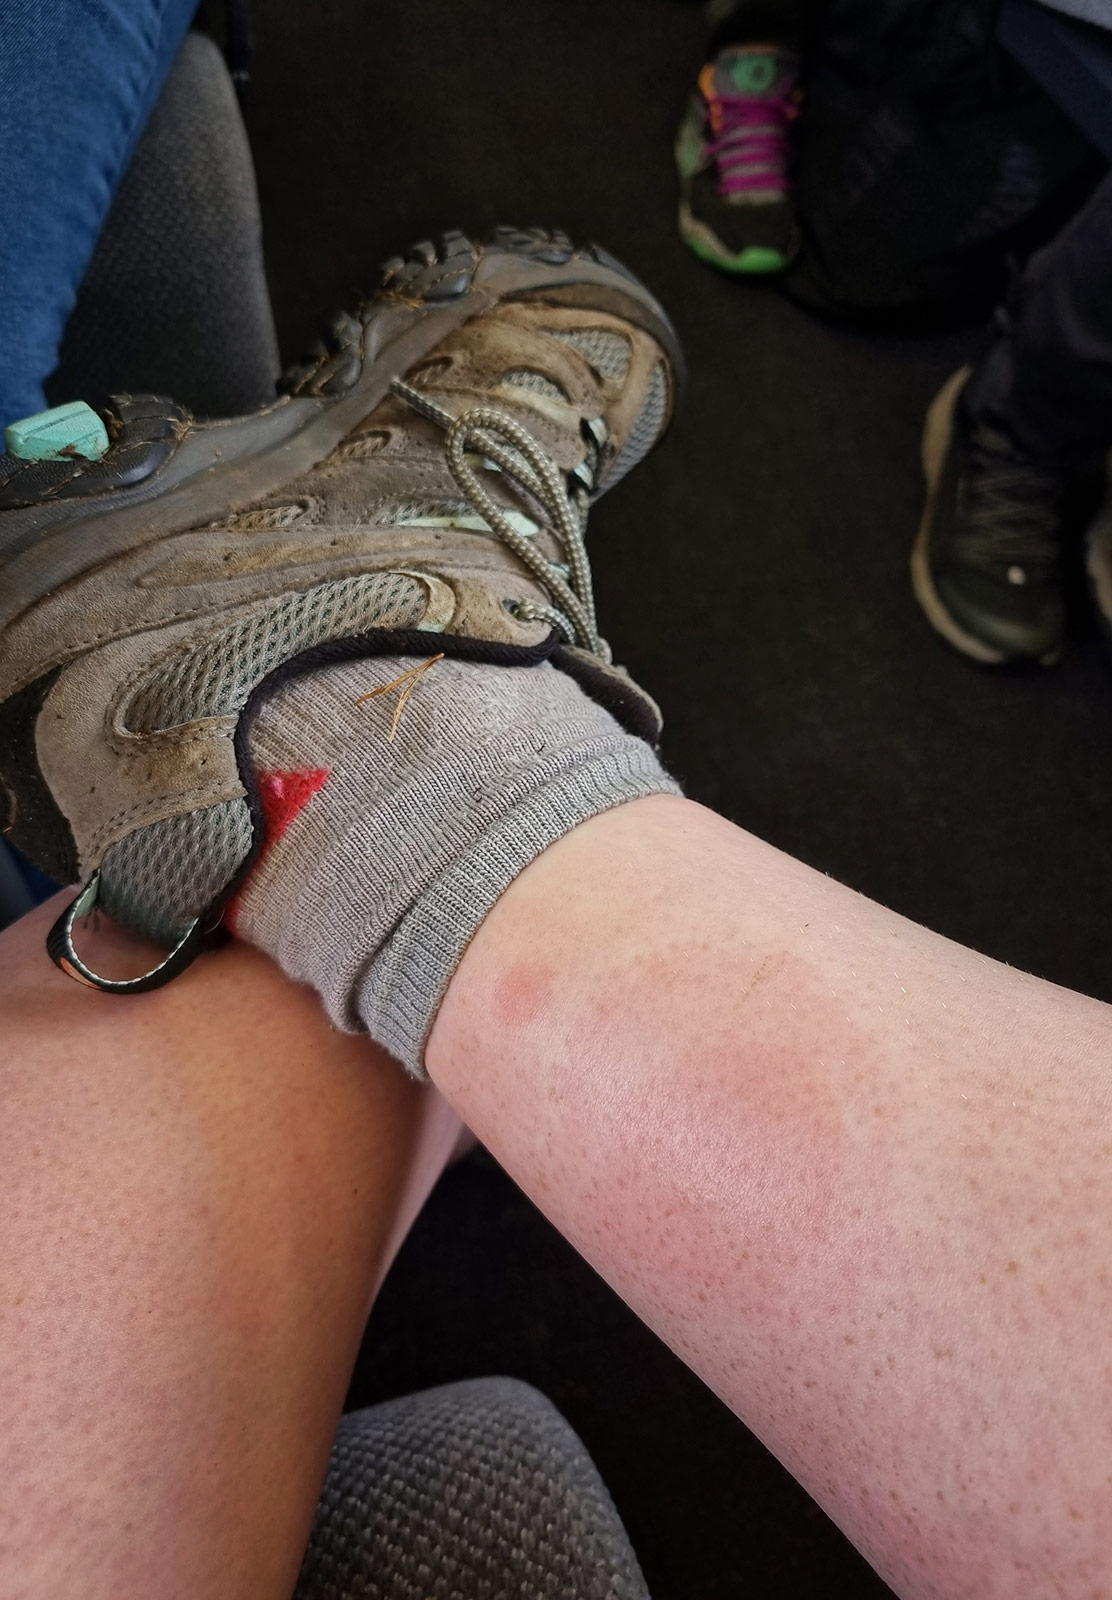 Big bite on swollen ankle